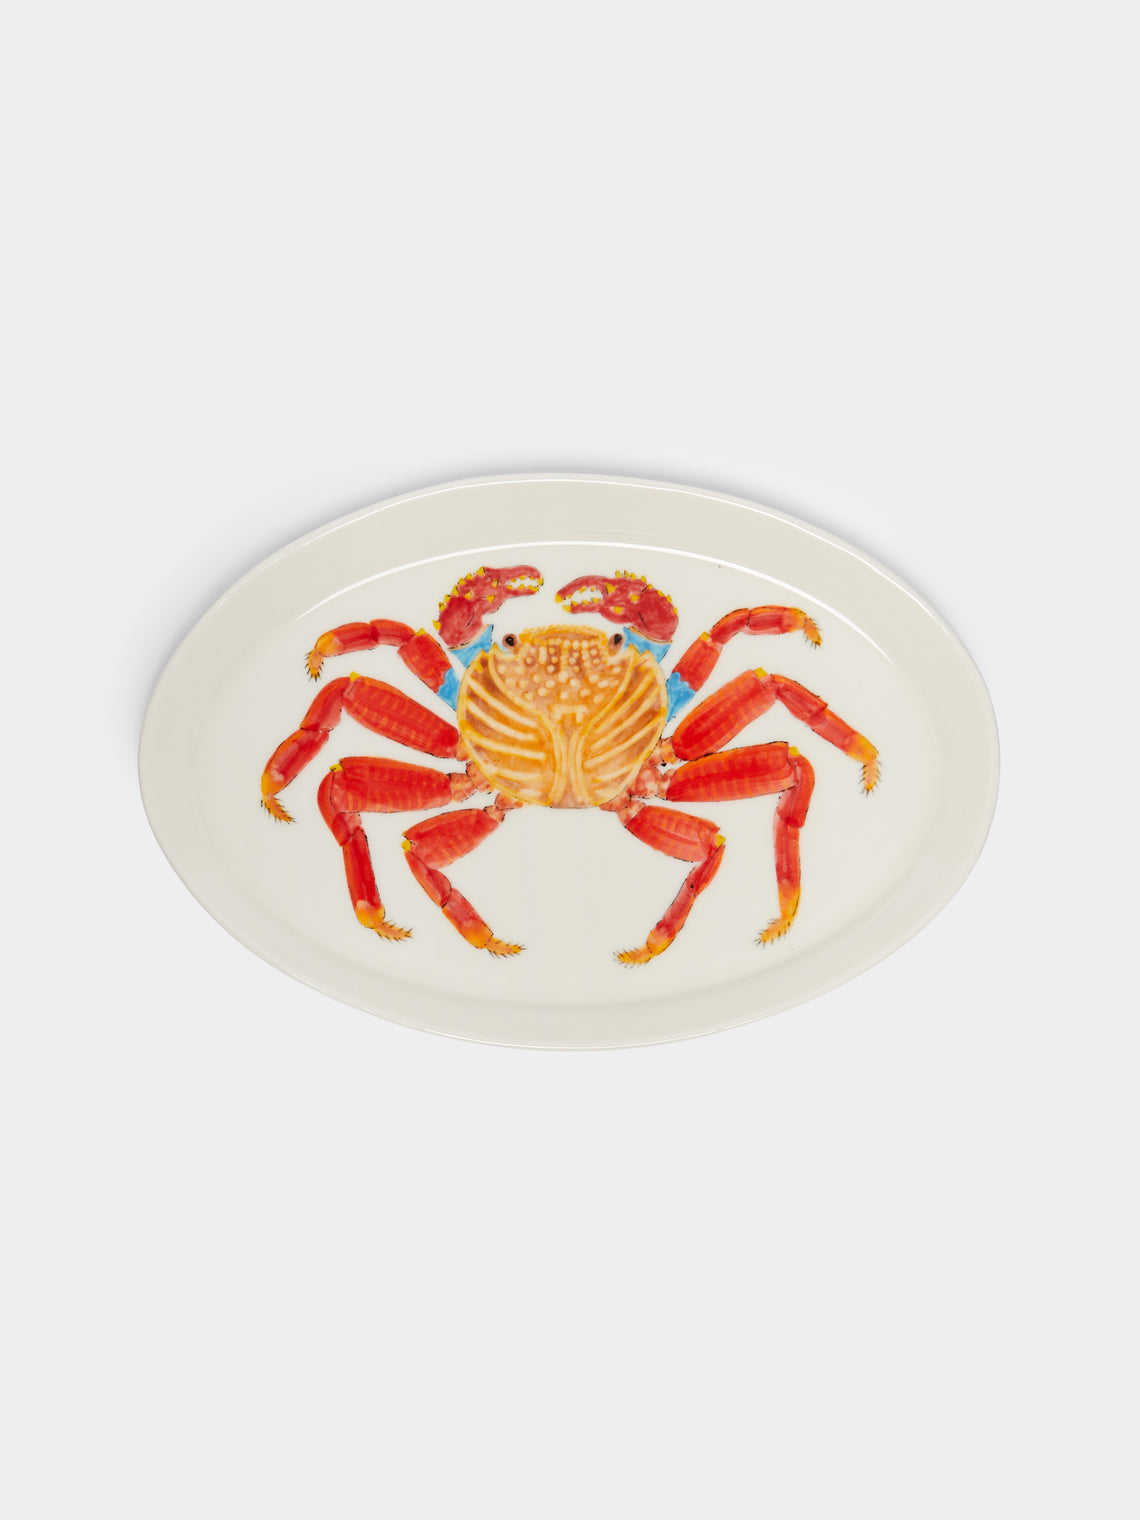 Casa Adams - Sally Lightfoot Crab Hand-Painted Porcelain Serving Platter -  - ABASK - 